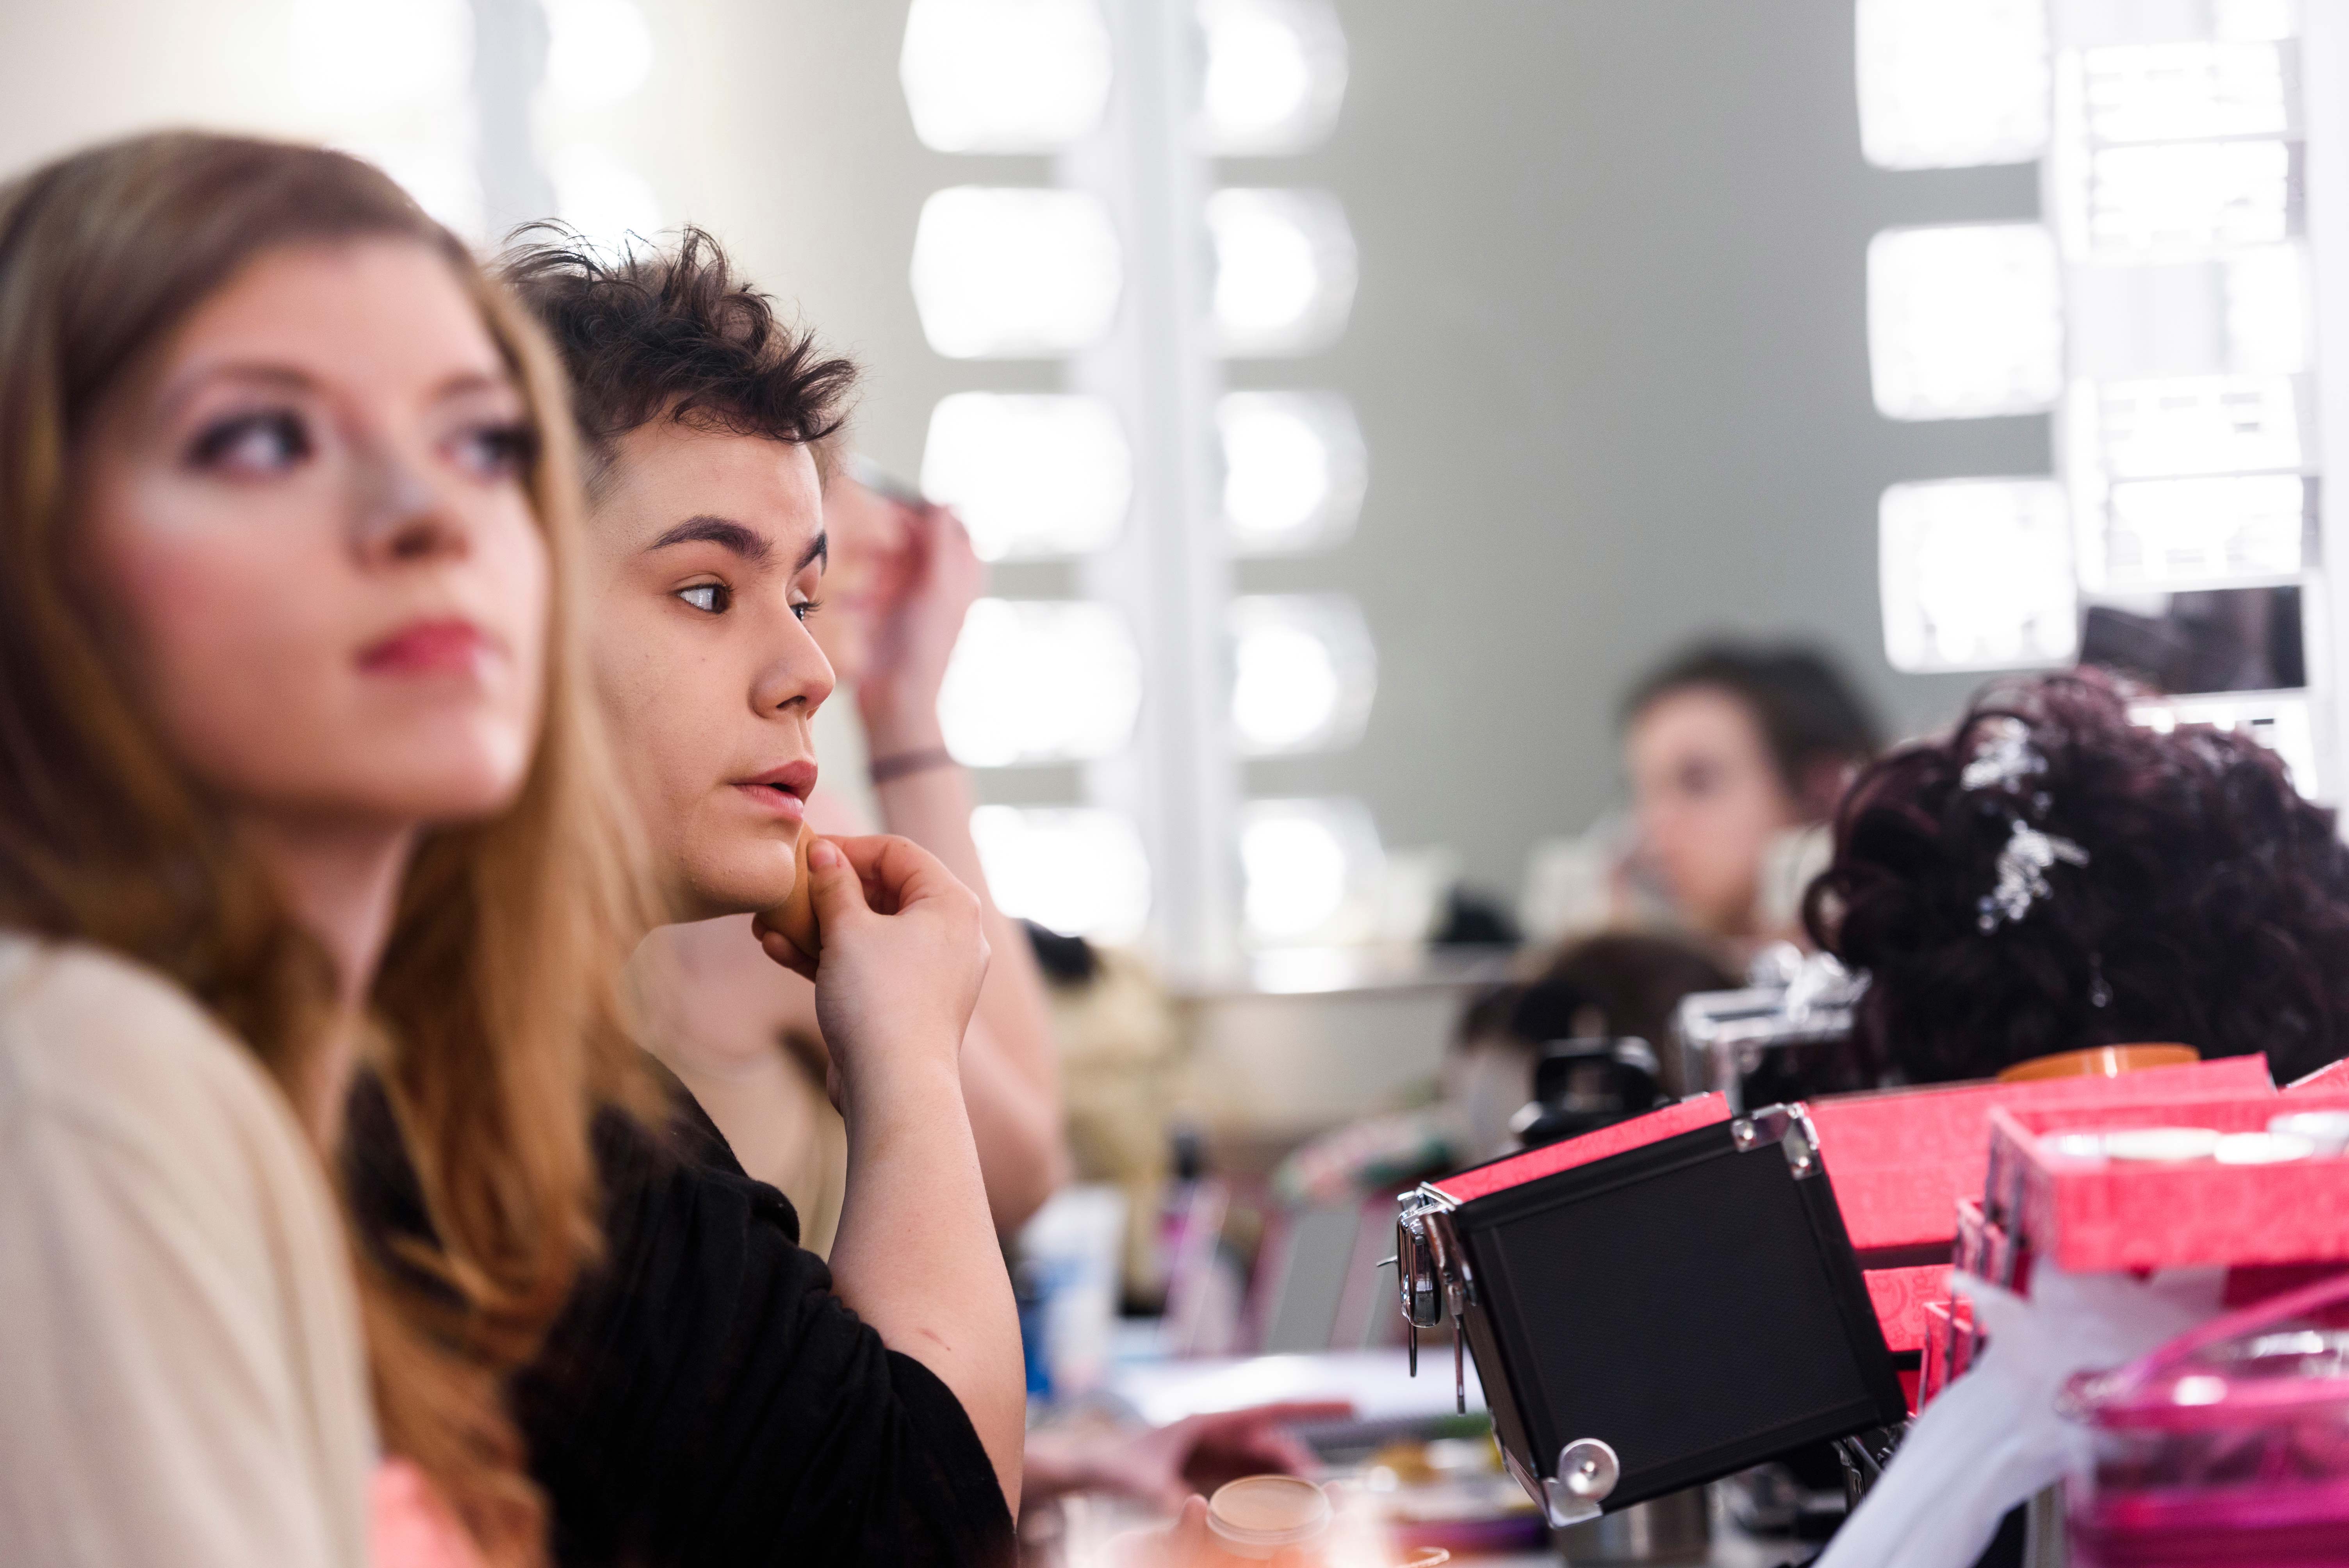 actors applying makeup backstage